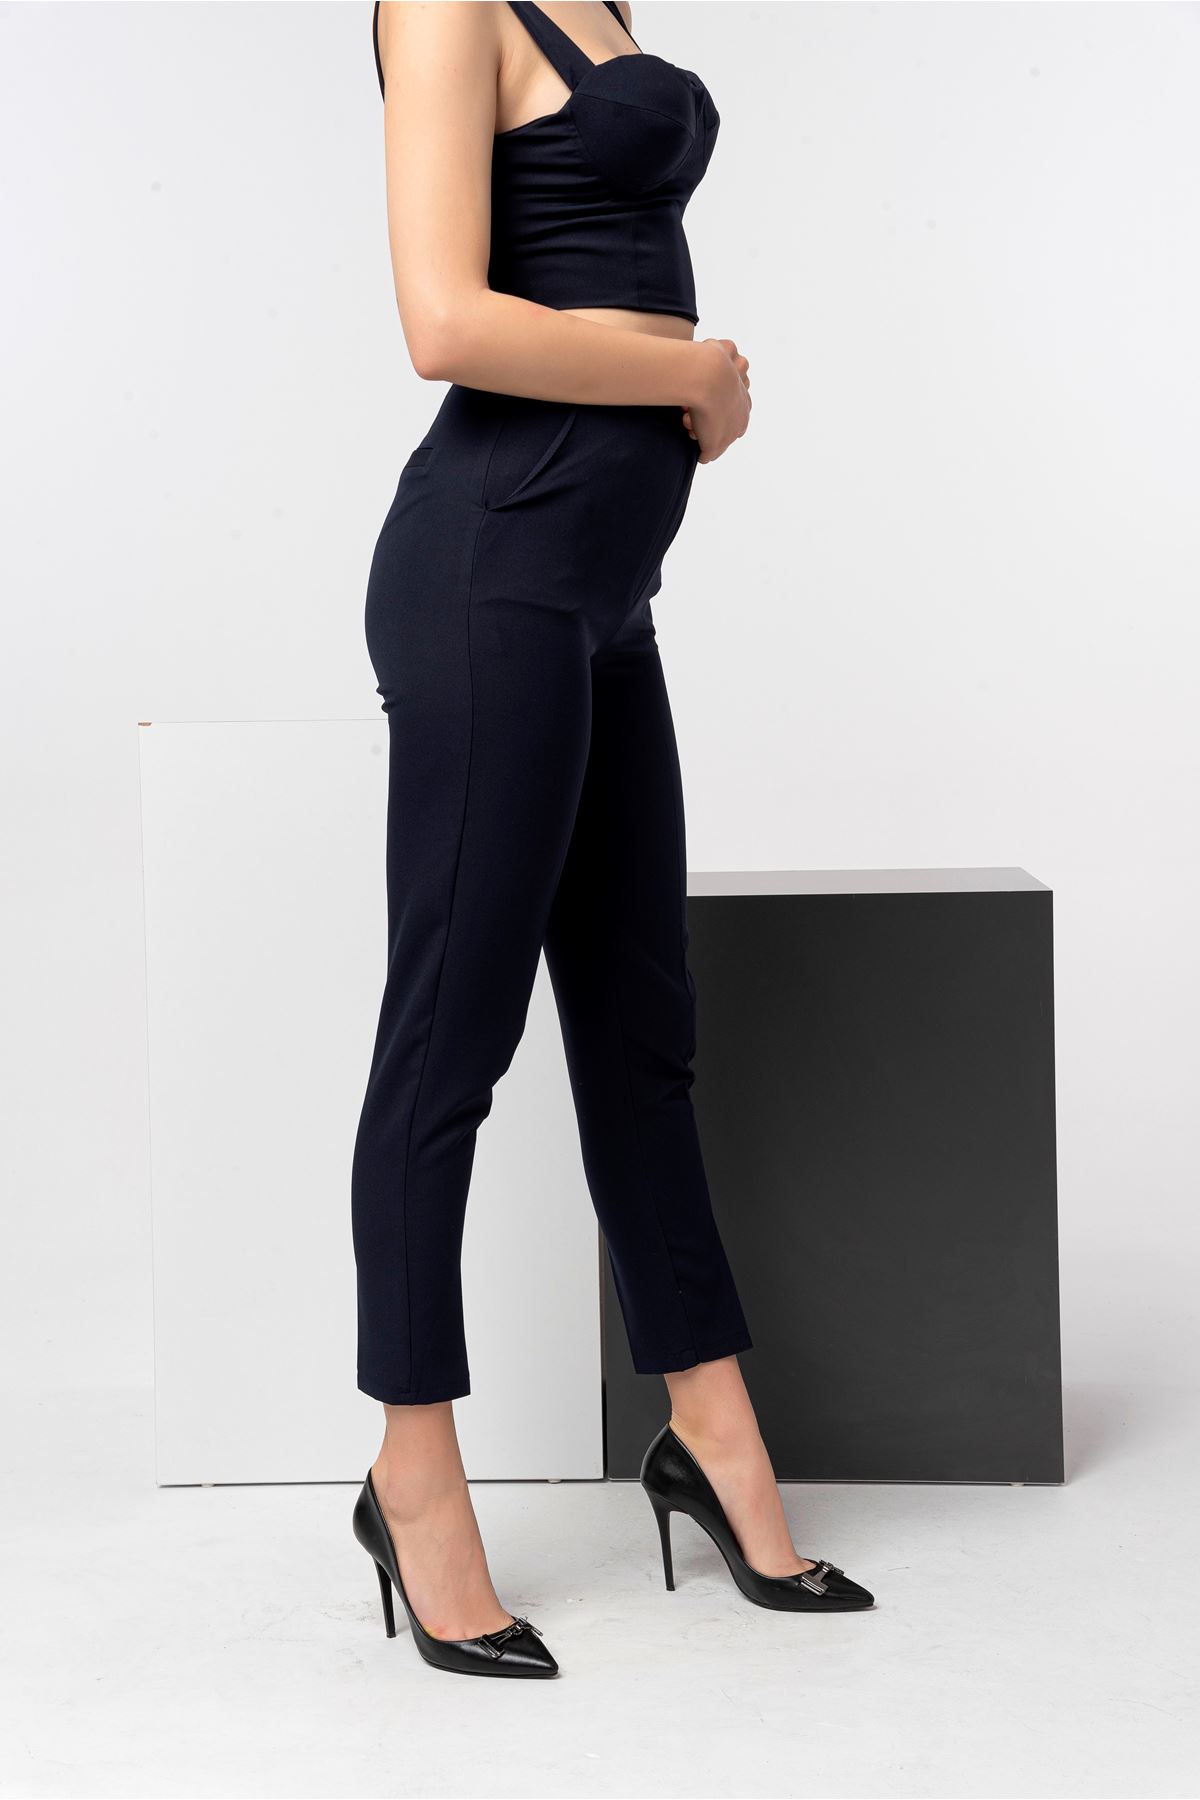 Atlas Fabric Classical Women'S Trouser - Navy Blue 